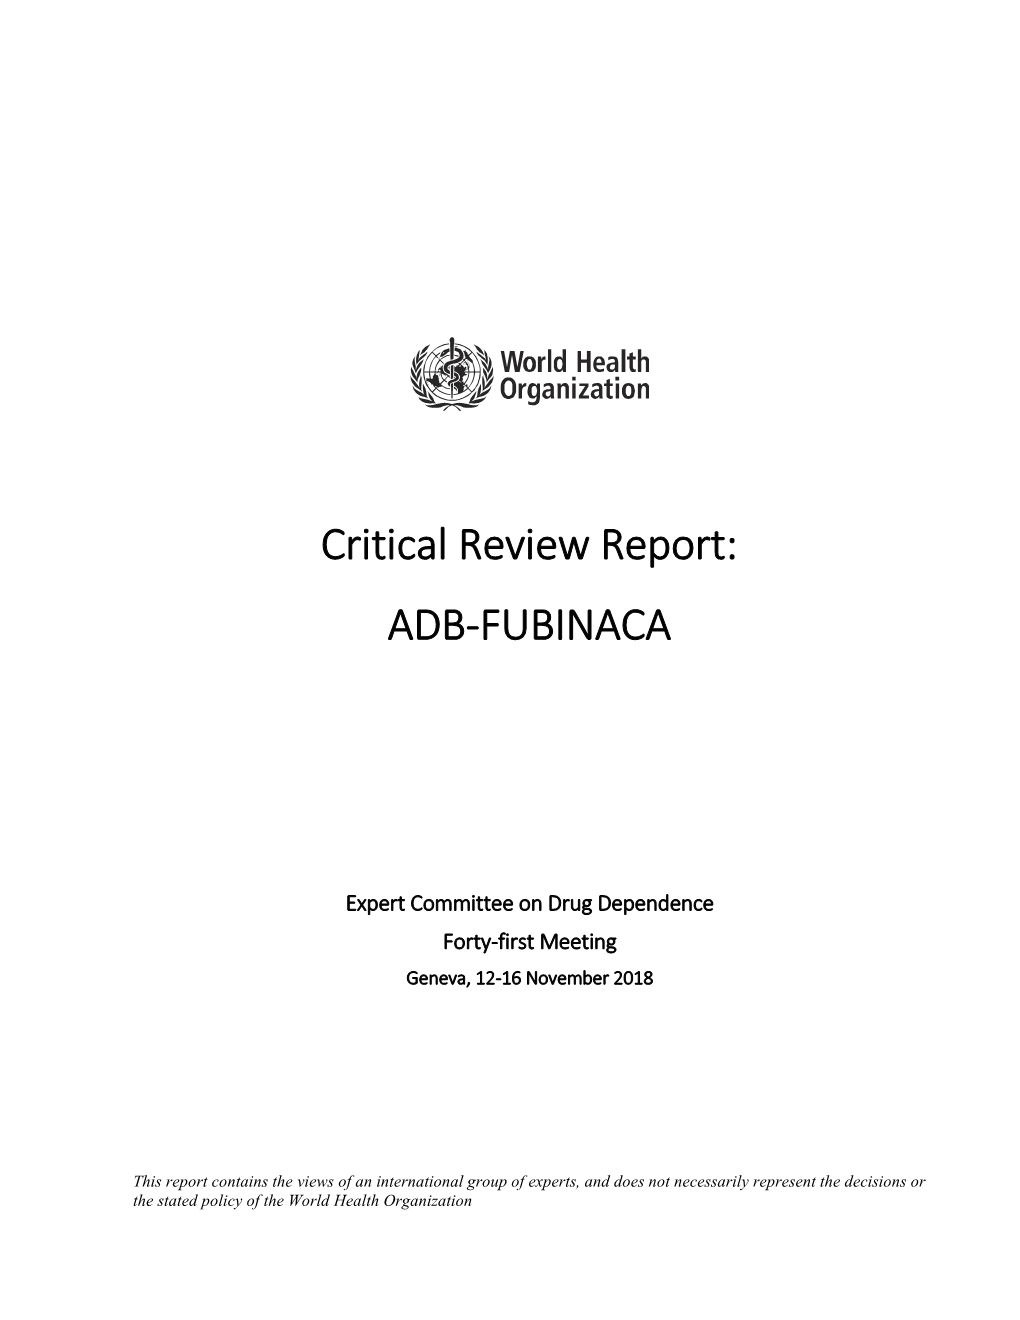 Critical Review Report: ADB-FUBINACA